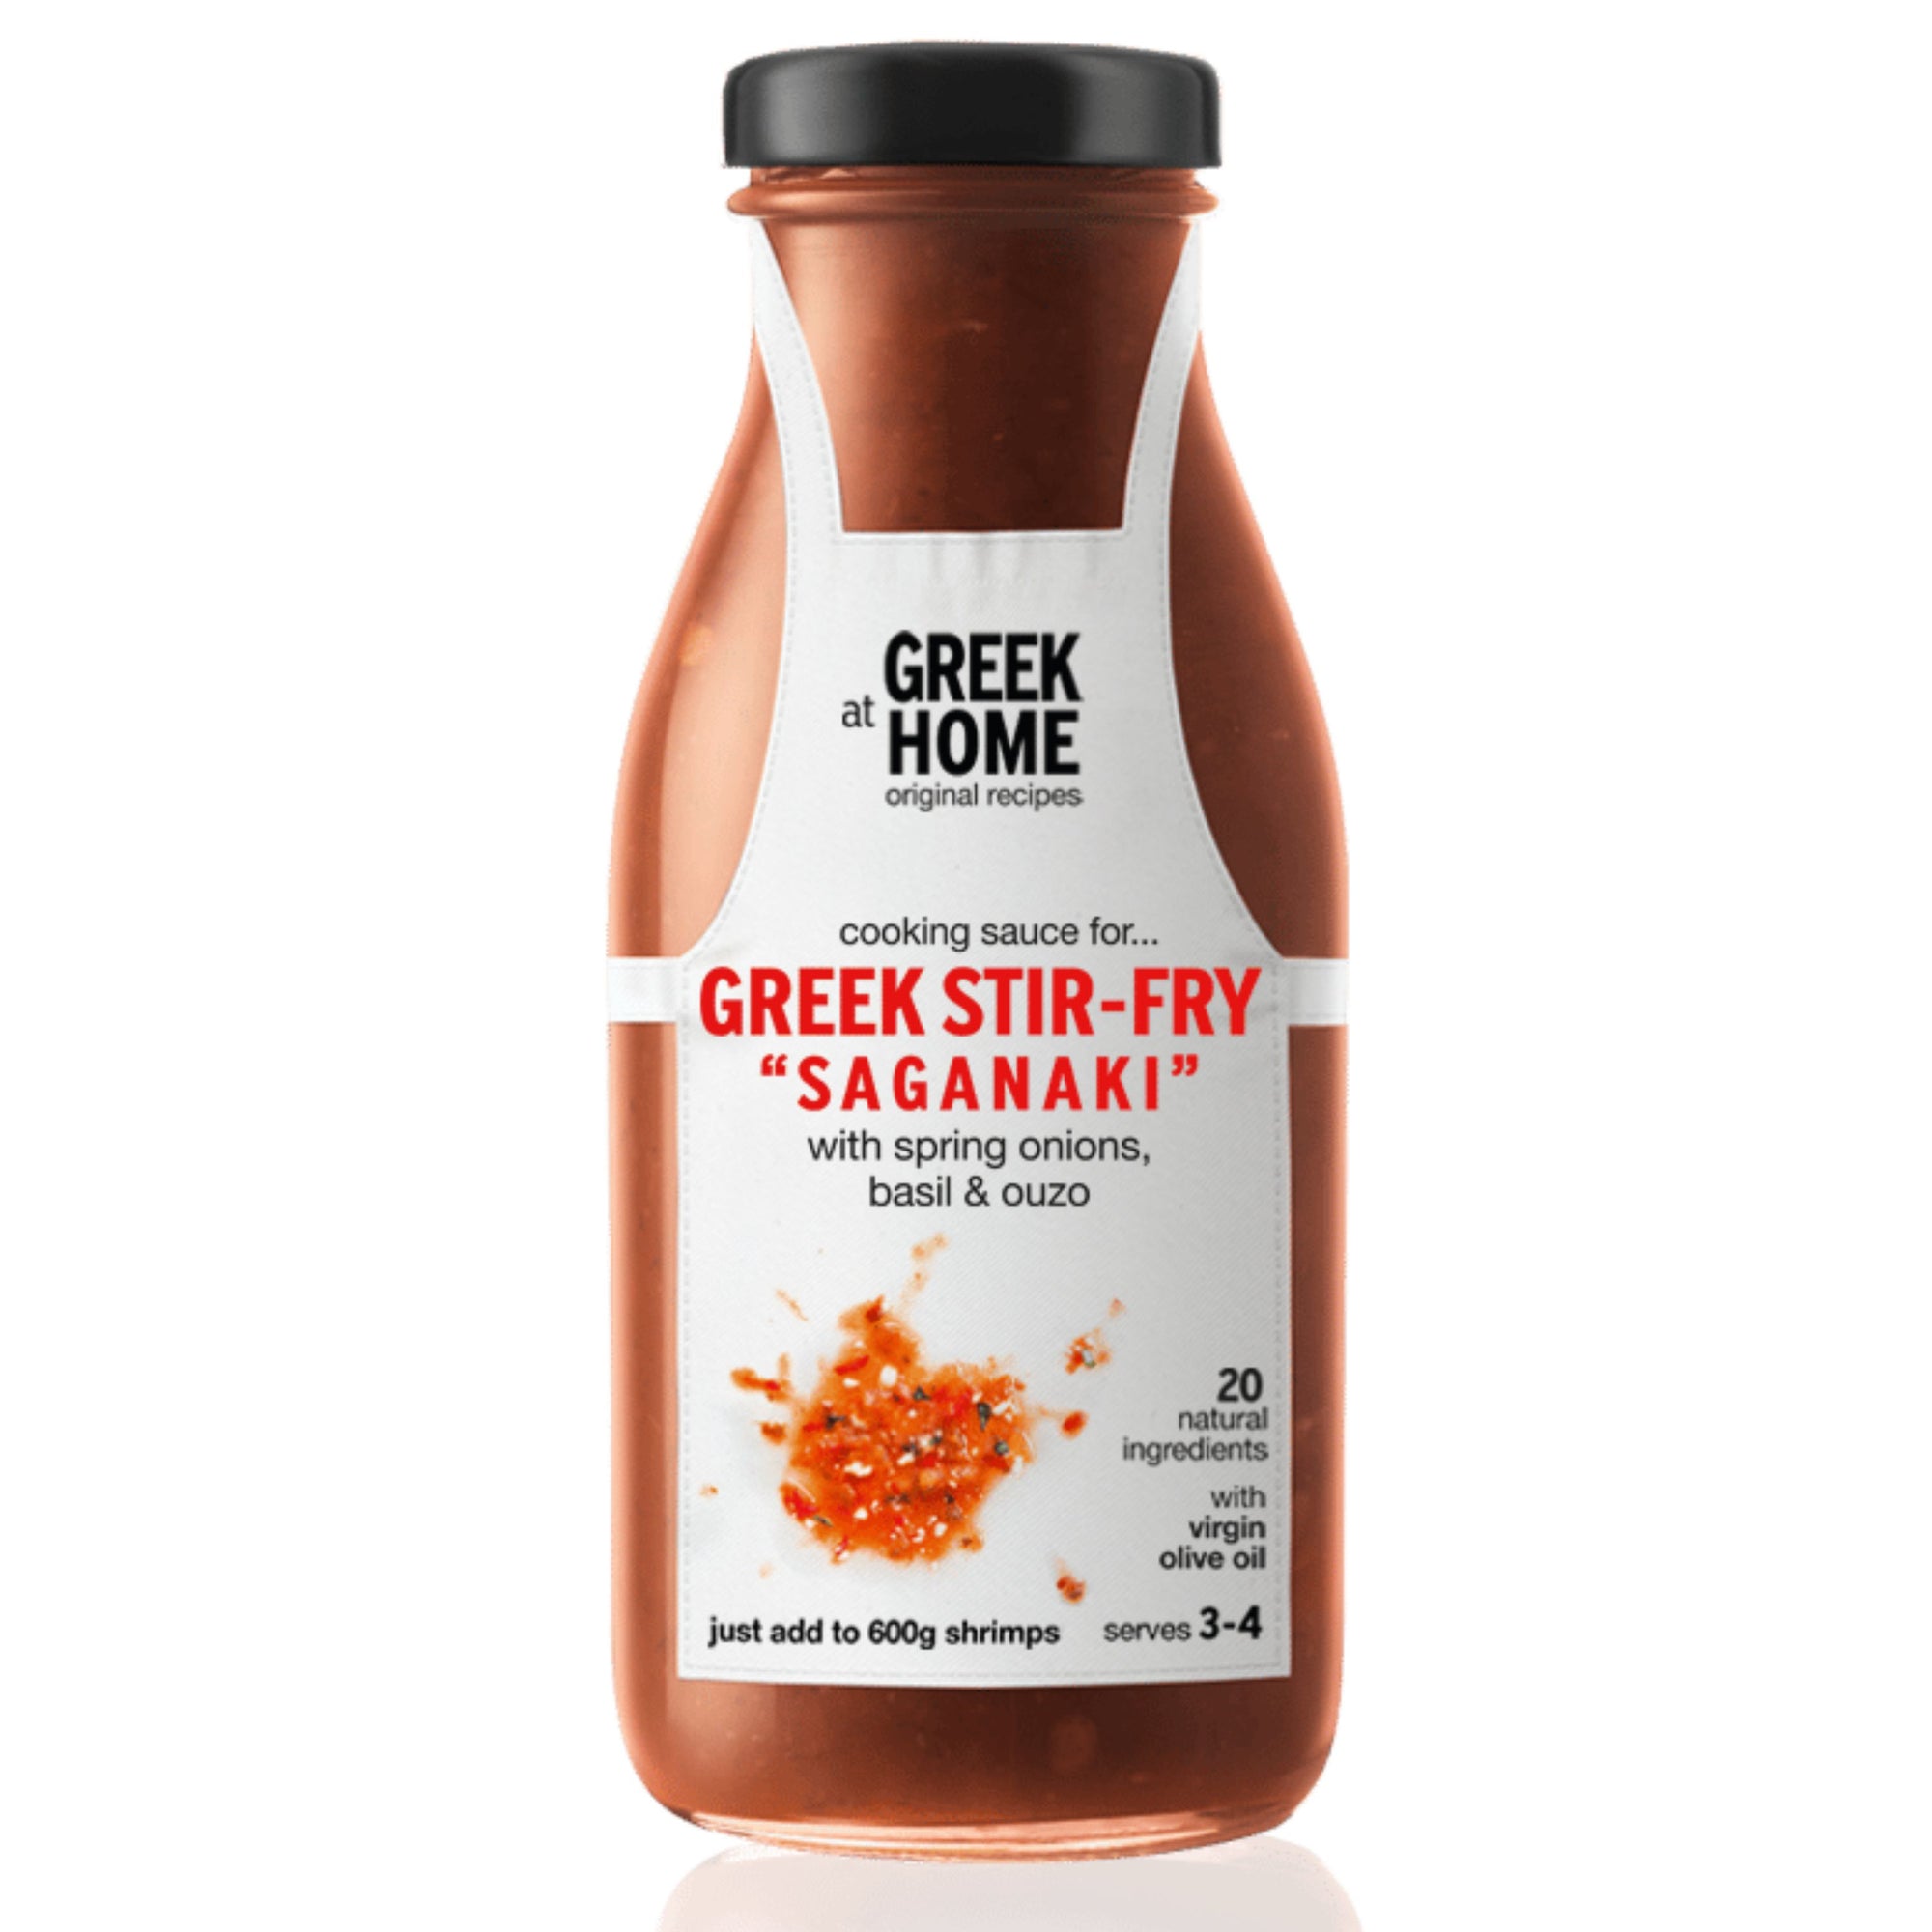 Greek Stir-Fry "Saganaki" Sauce 250g